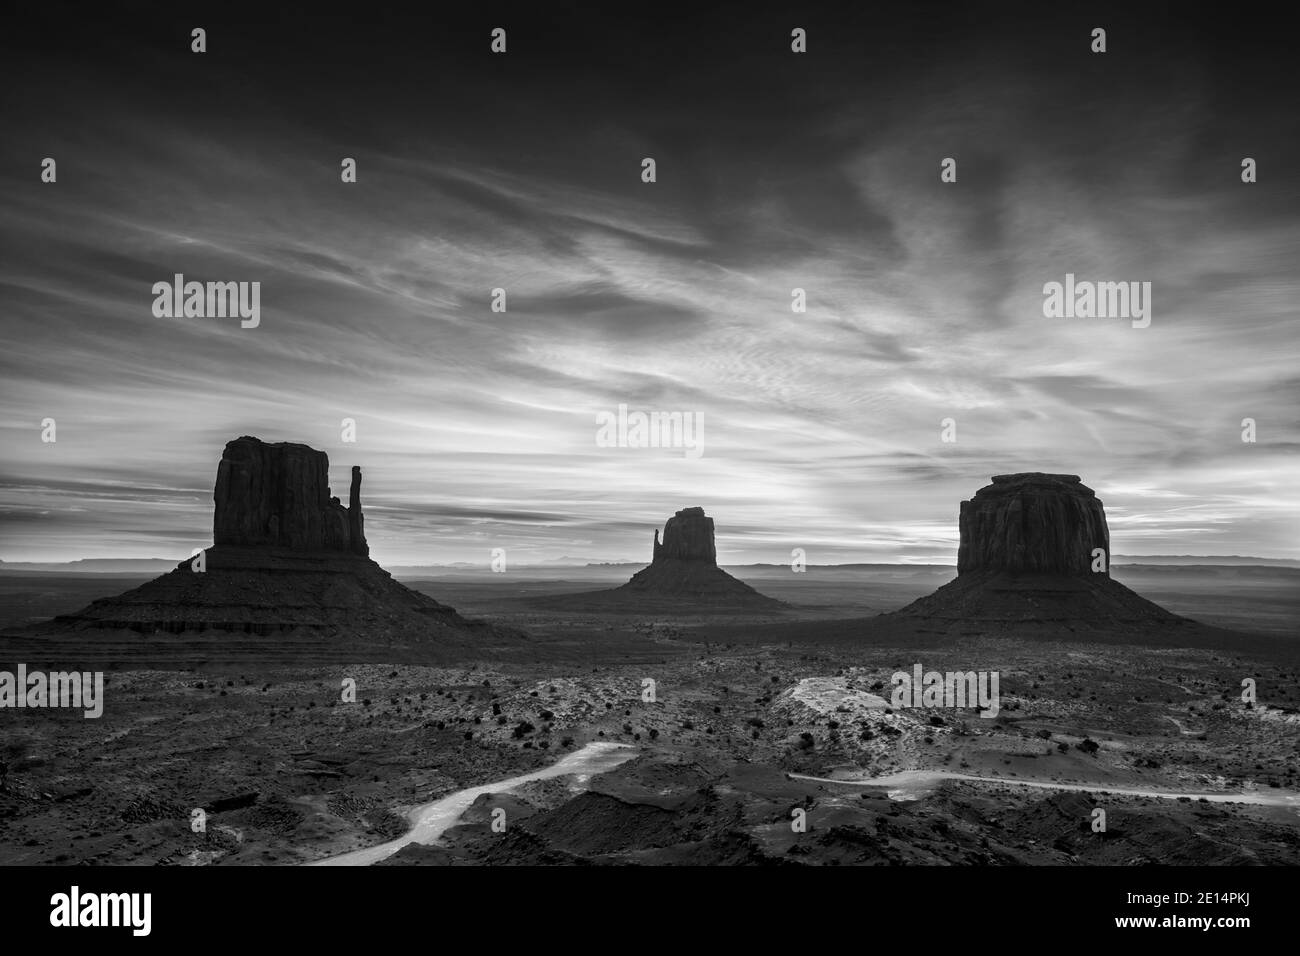 Alba dietro West Mitten Butte, East Mitten Butte e Merrick Butte, The Mittens at Sunrise, Monument Valley Navajo Tribal Park, Arizona, Stati Uniti Foto Stock